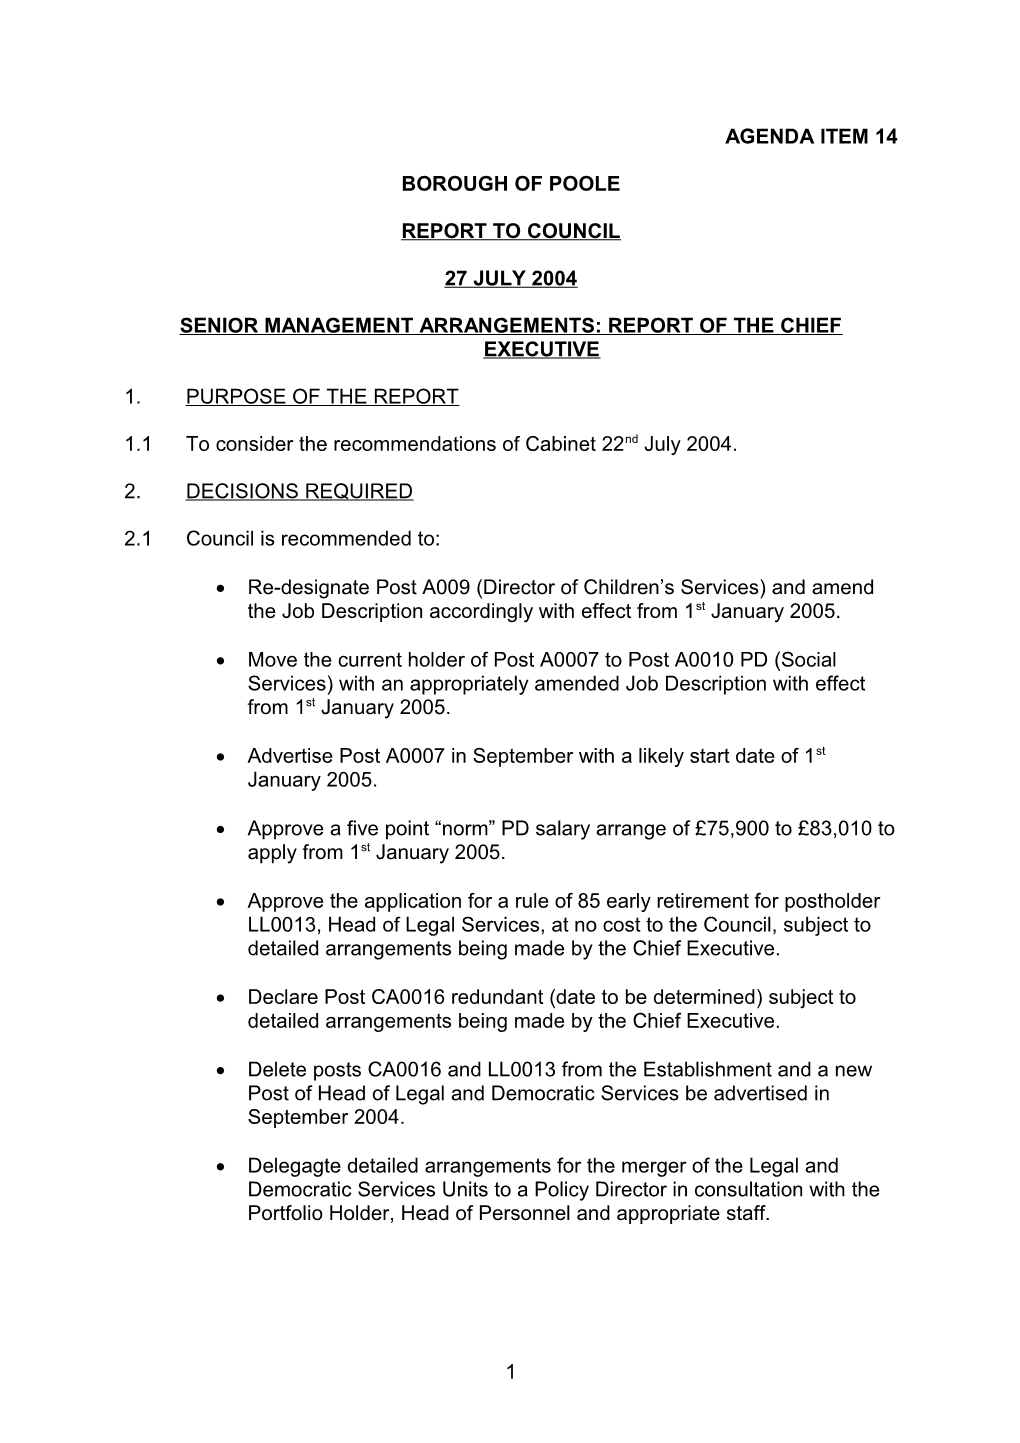 Senior Management Arrangements: Report of the Chief Executive